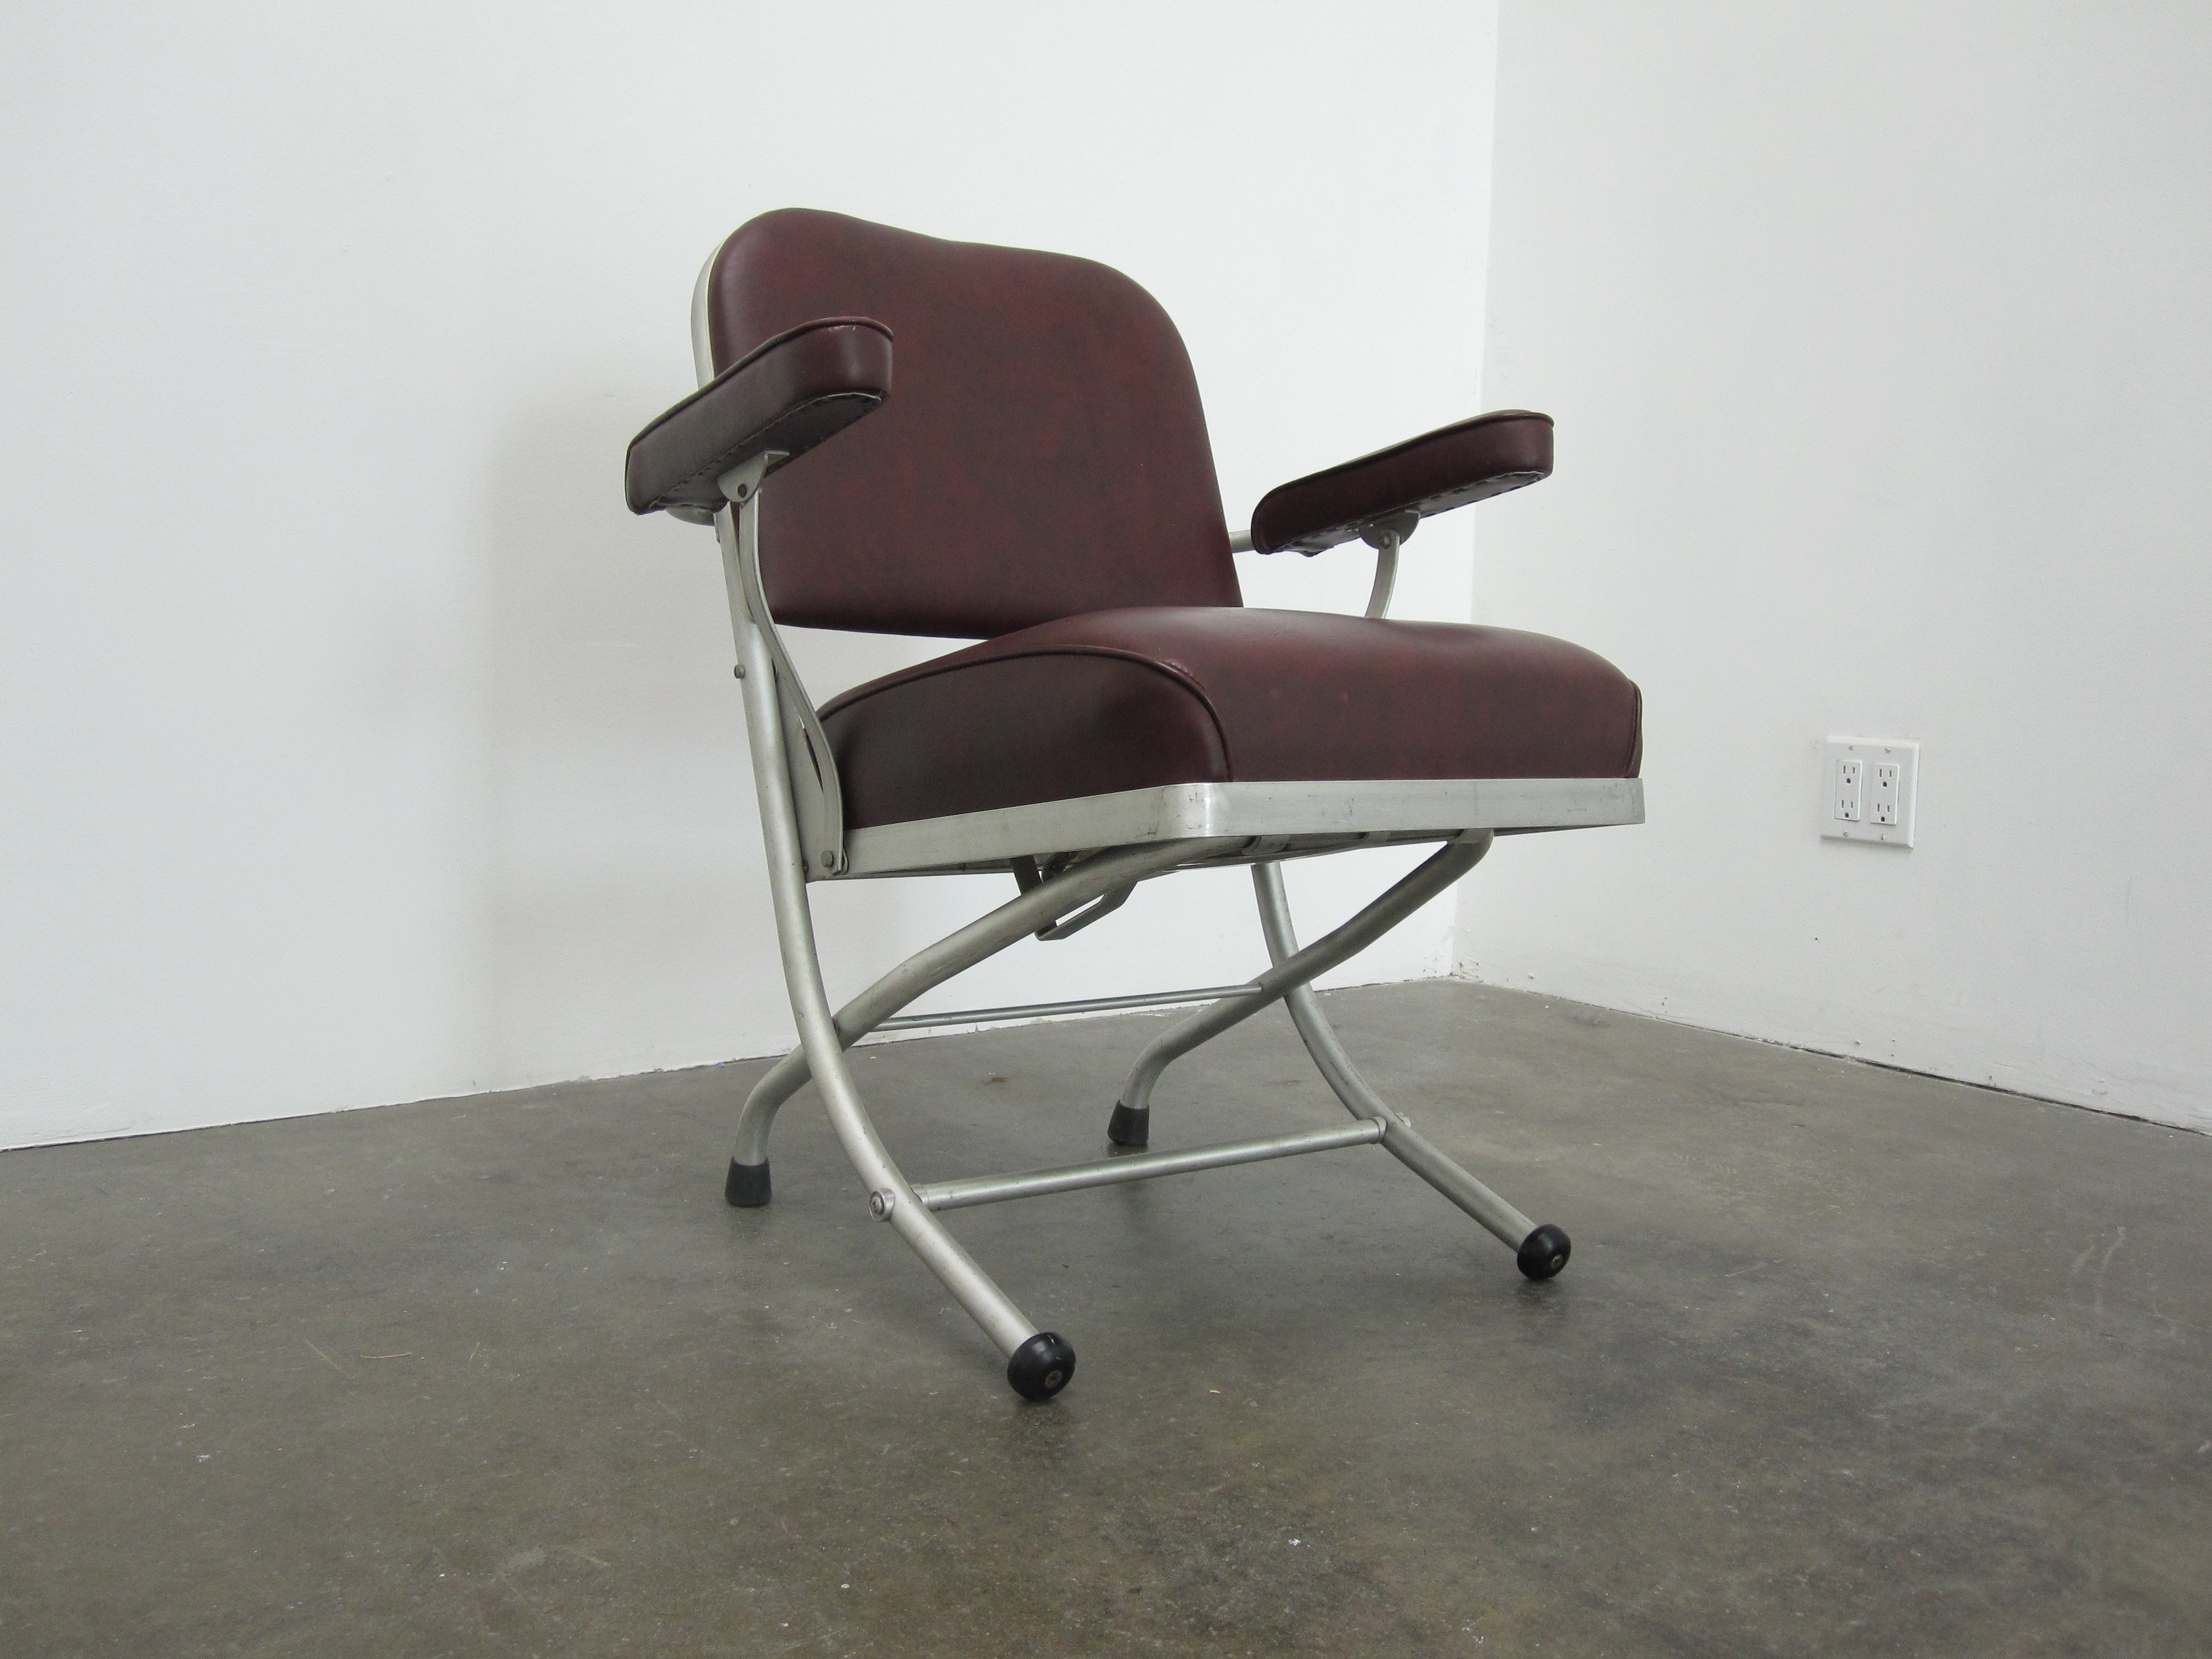 Machine Age Aluminum Folding Chair by Warren McArthur